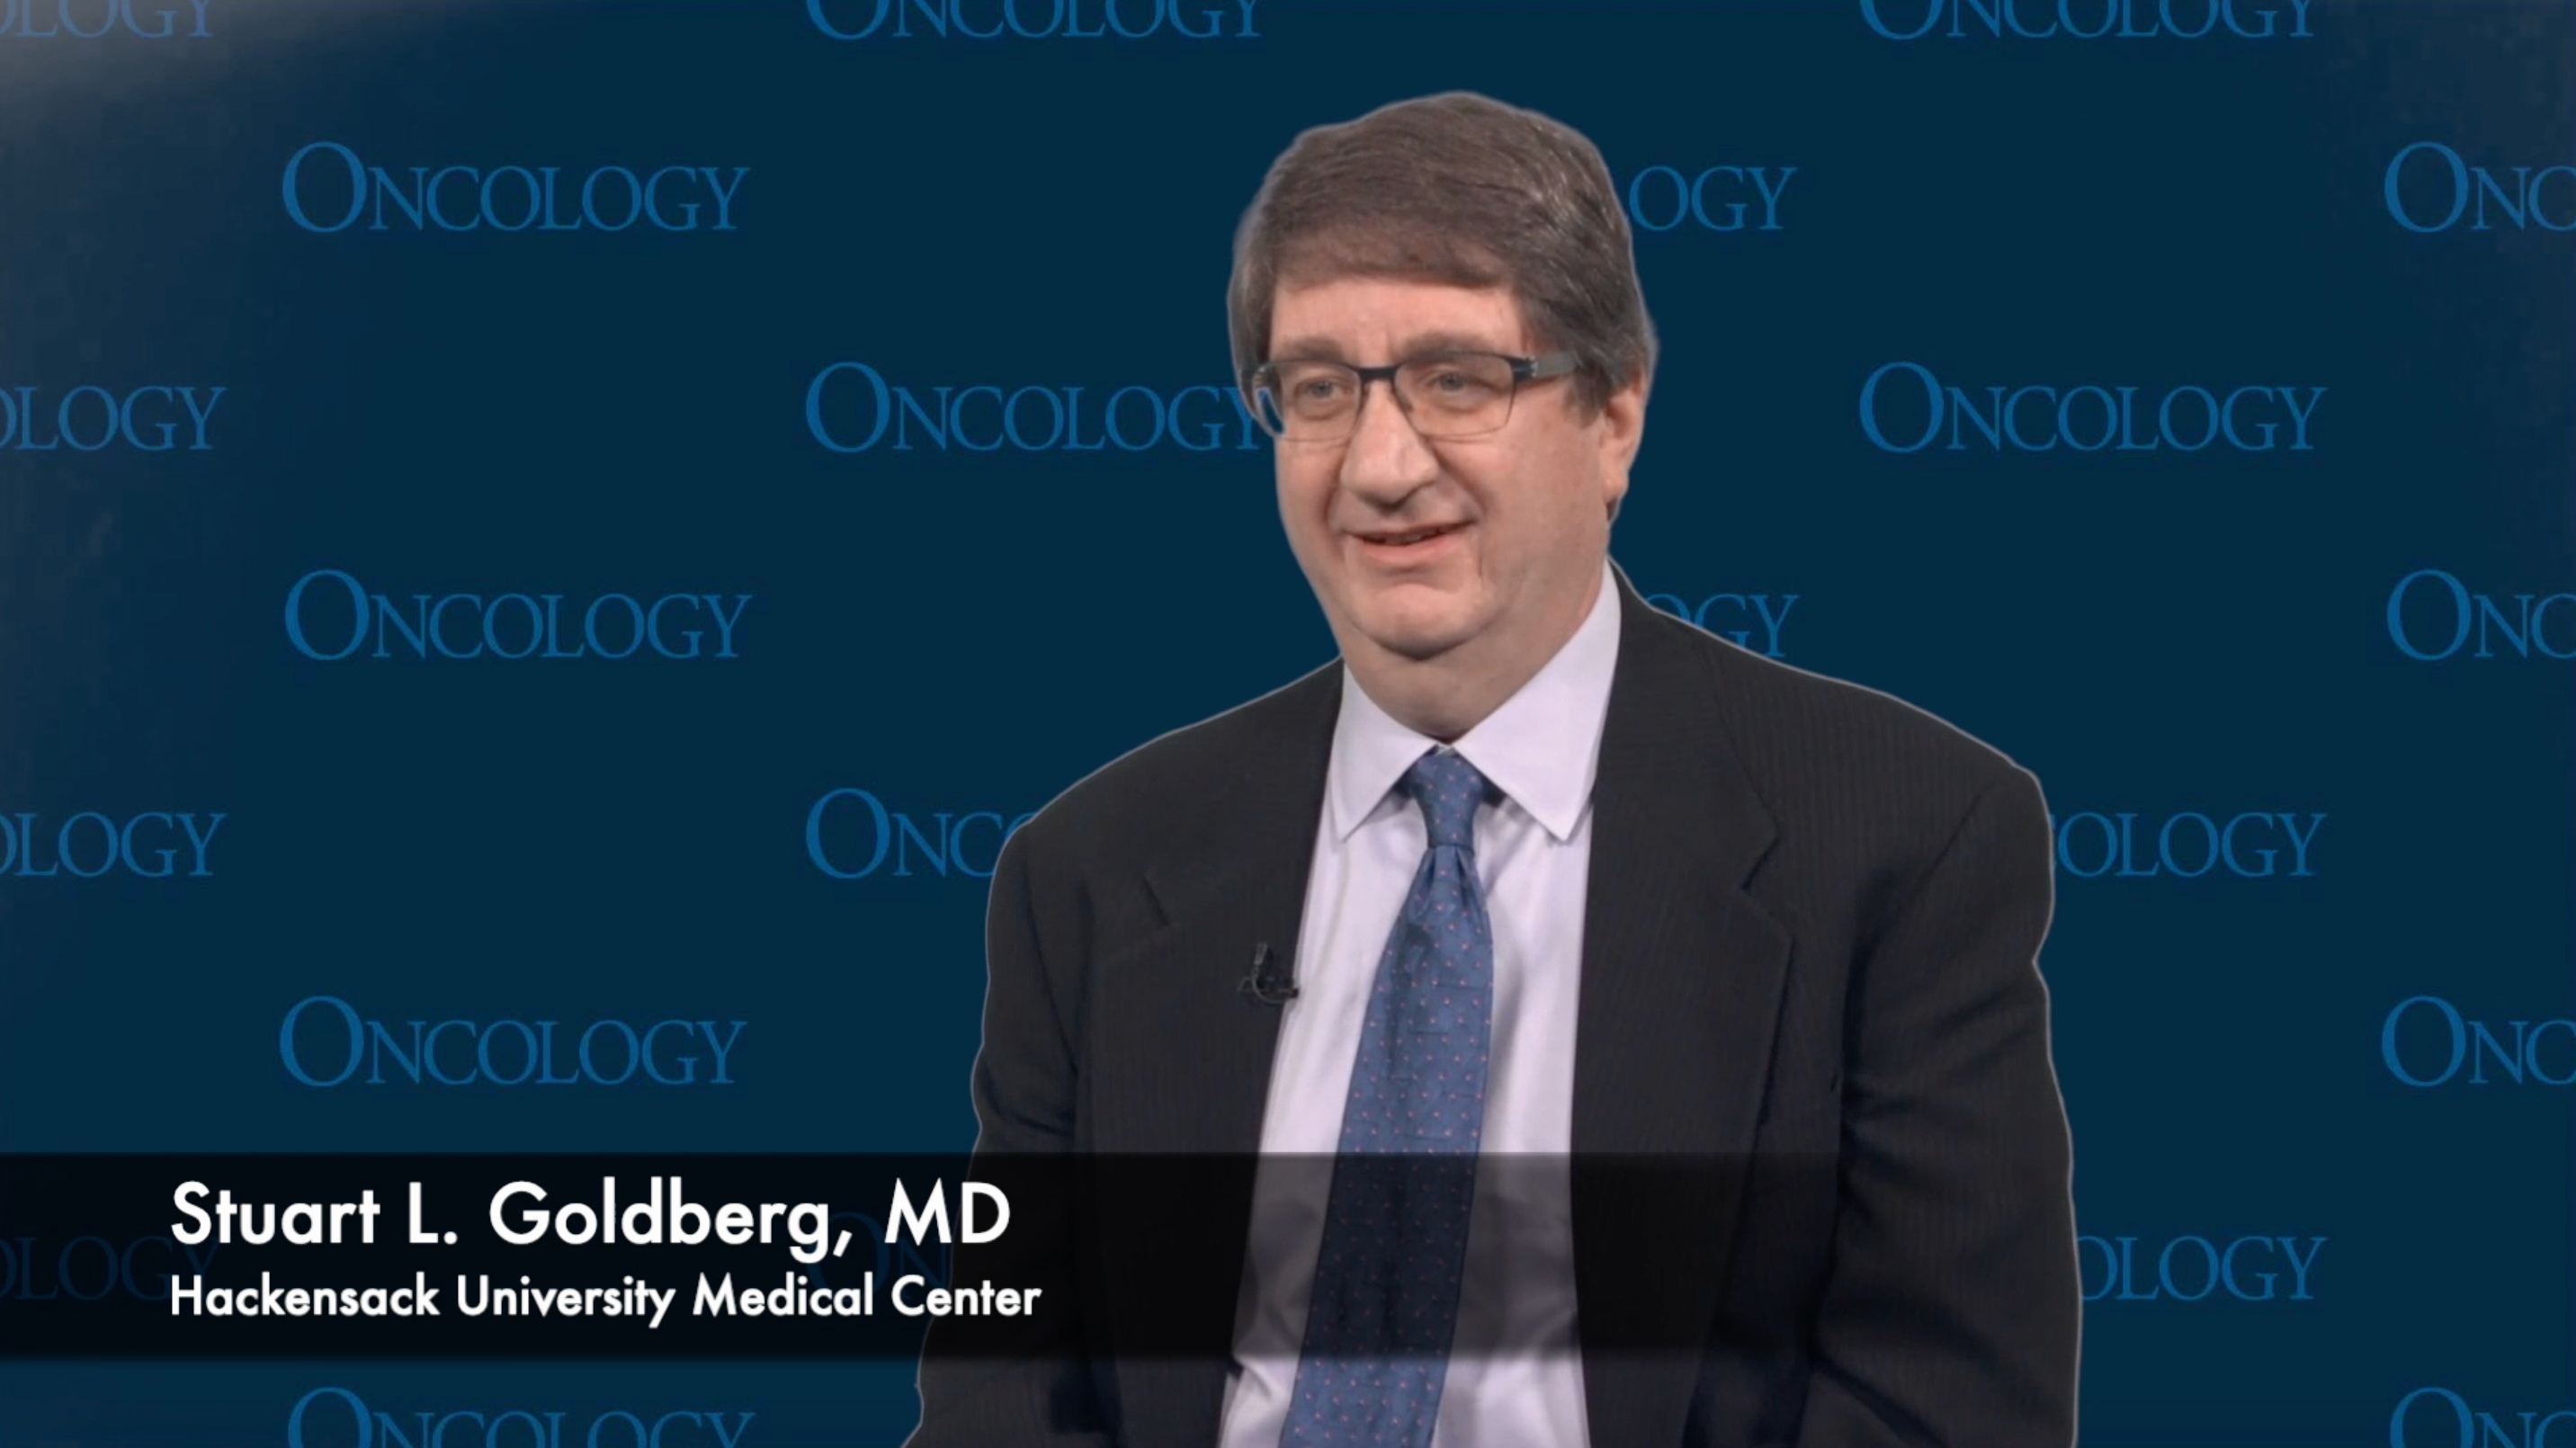 Stuart L. Goldberg, MD, Discusses How Physicians Can Better Communicate Cancer Diagnoses